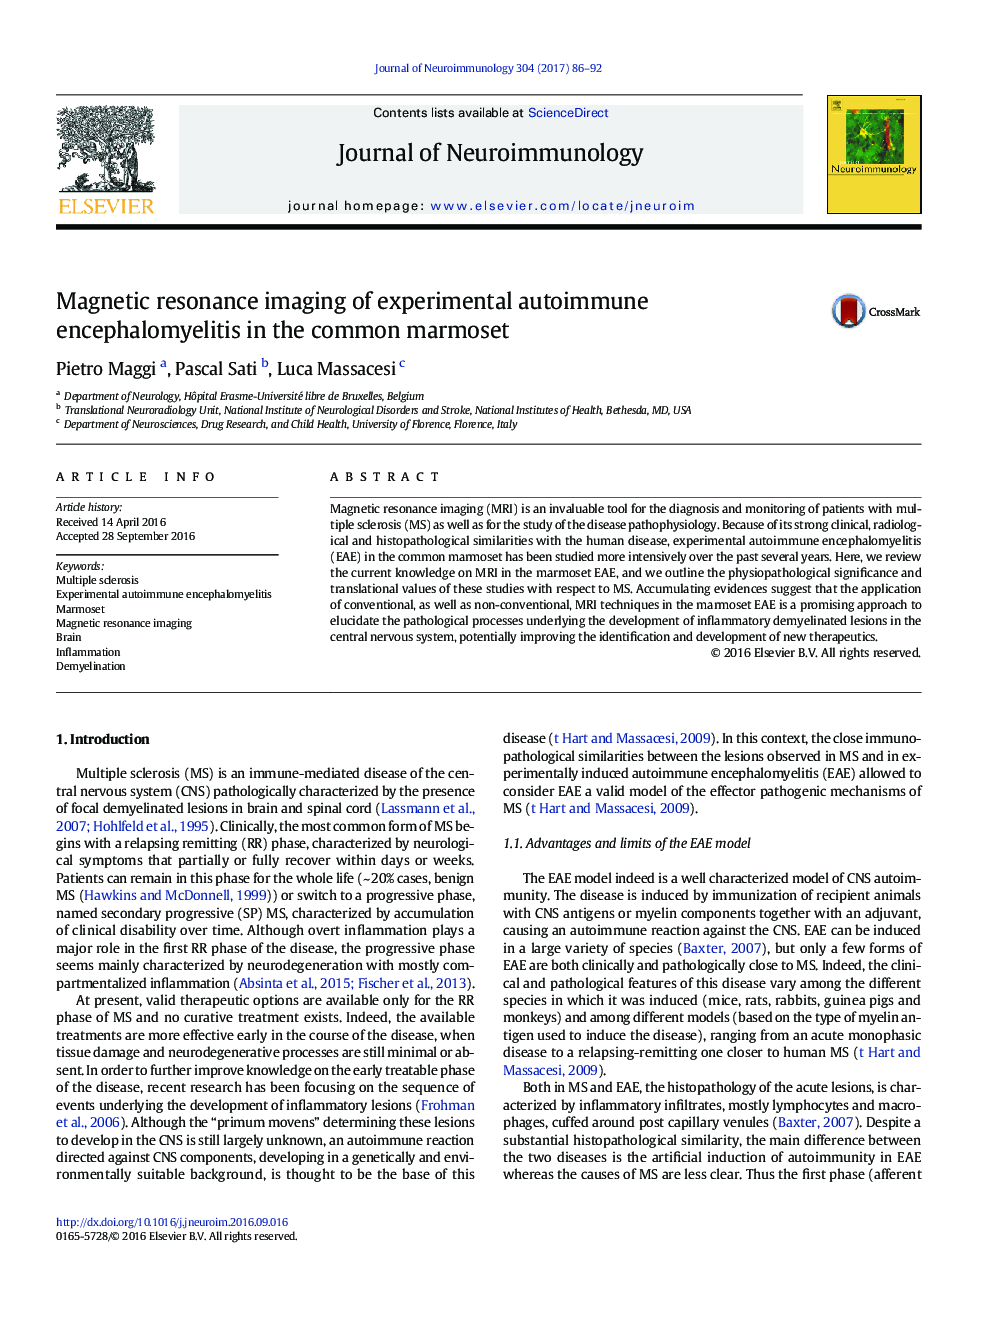 Magnetic resonance imaging of experimental autoimmune encephalomyelitis in the common marmoset